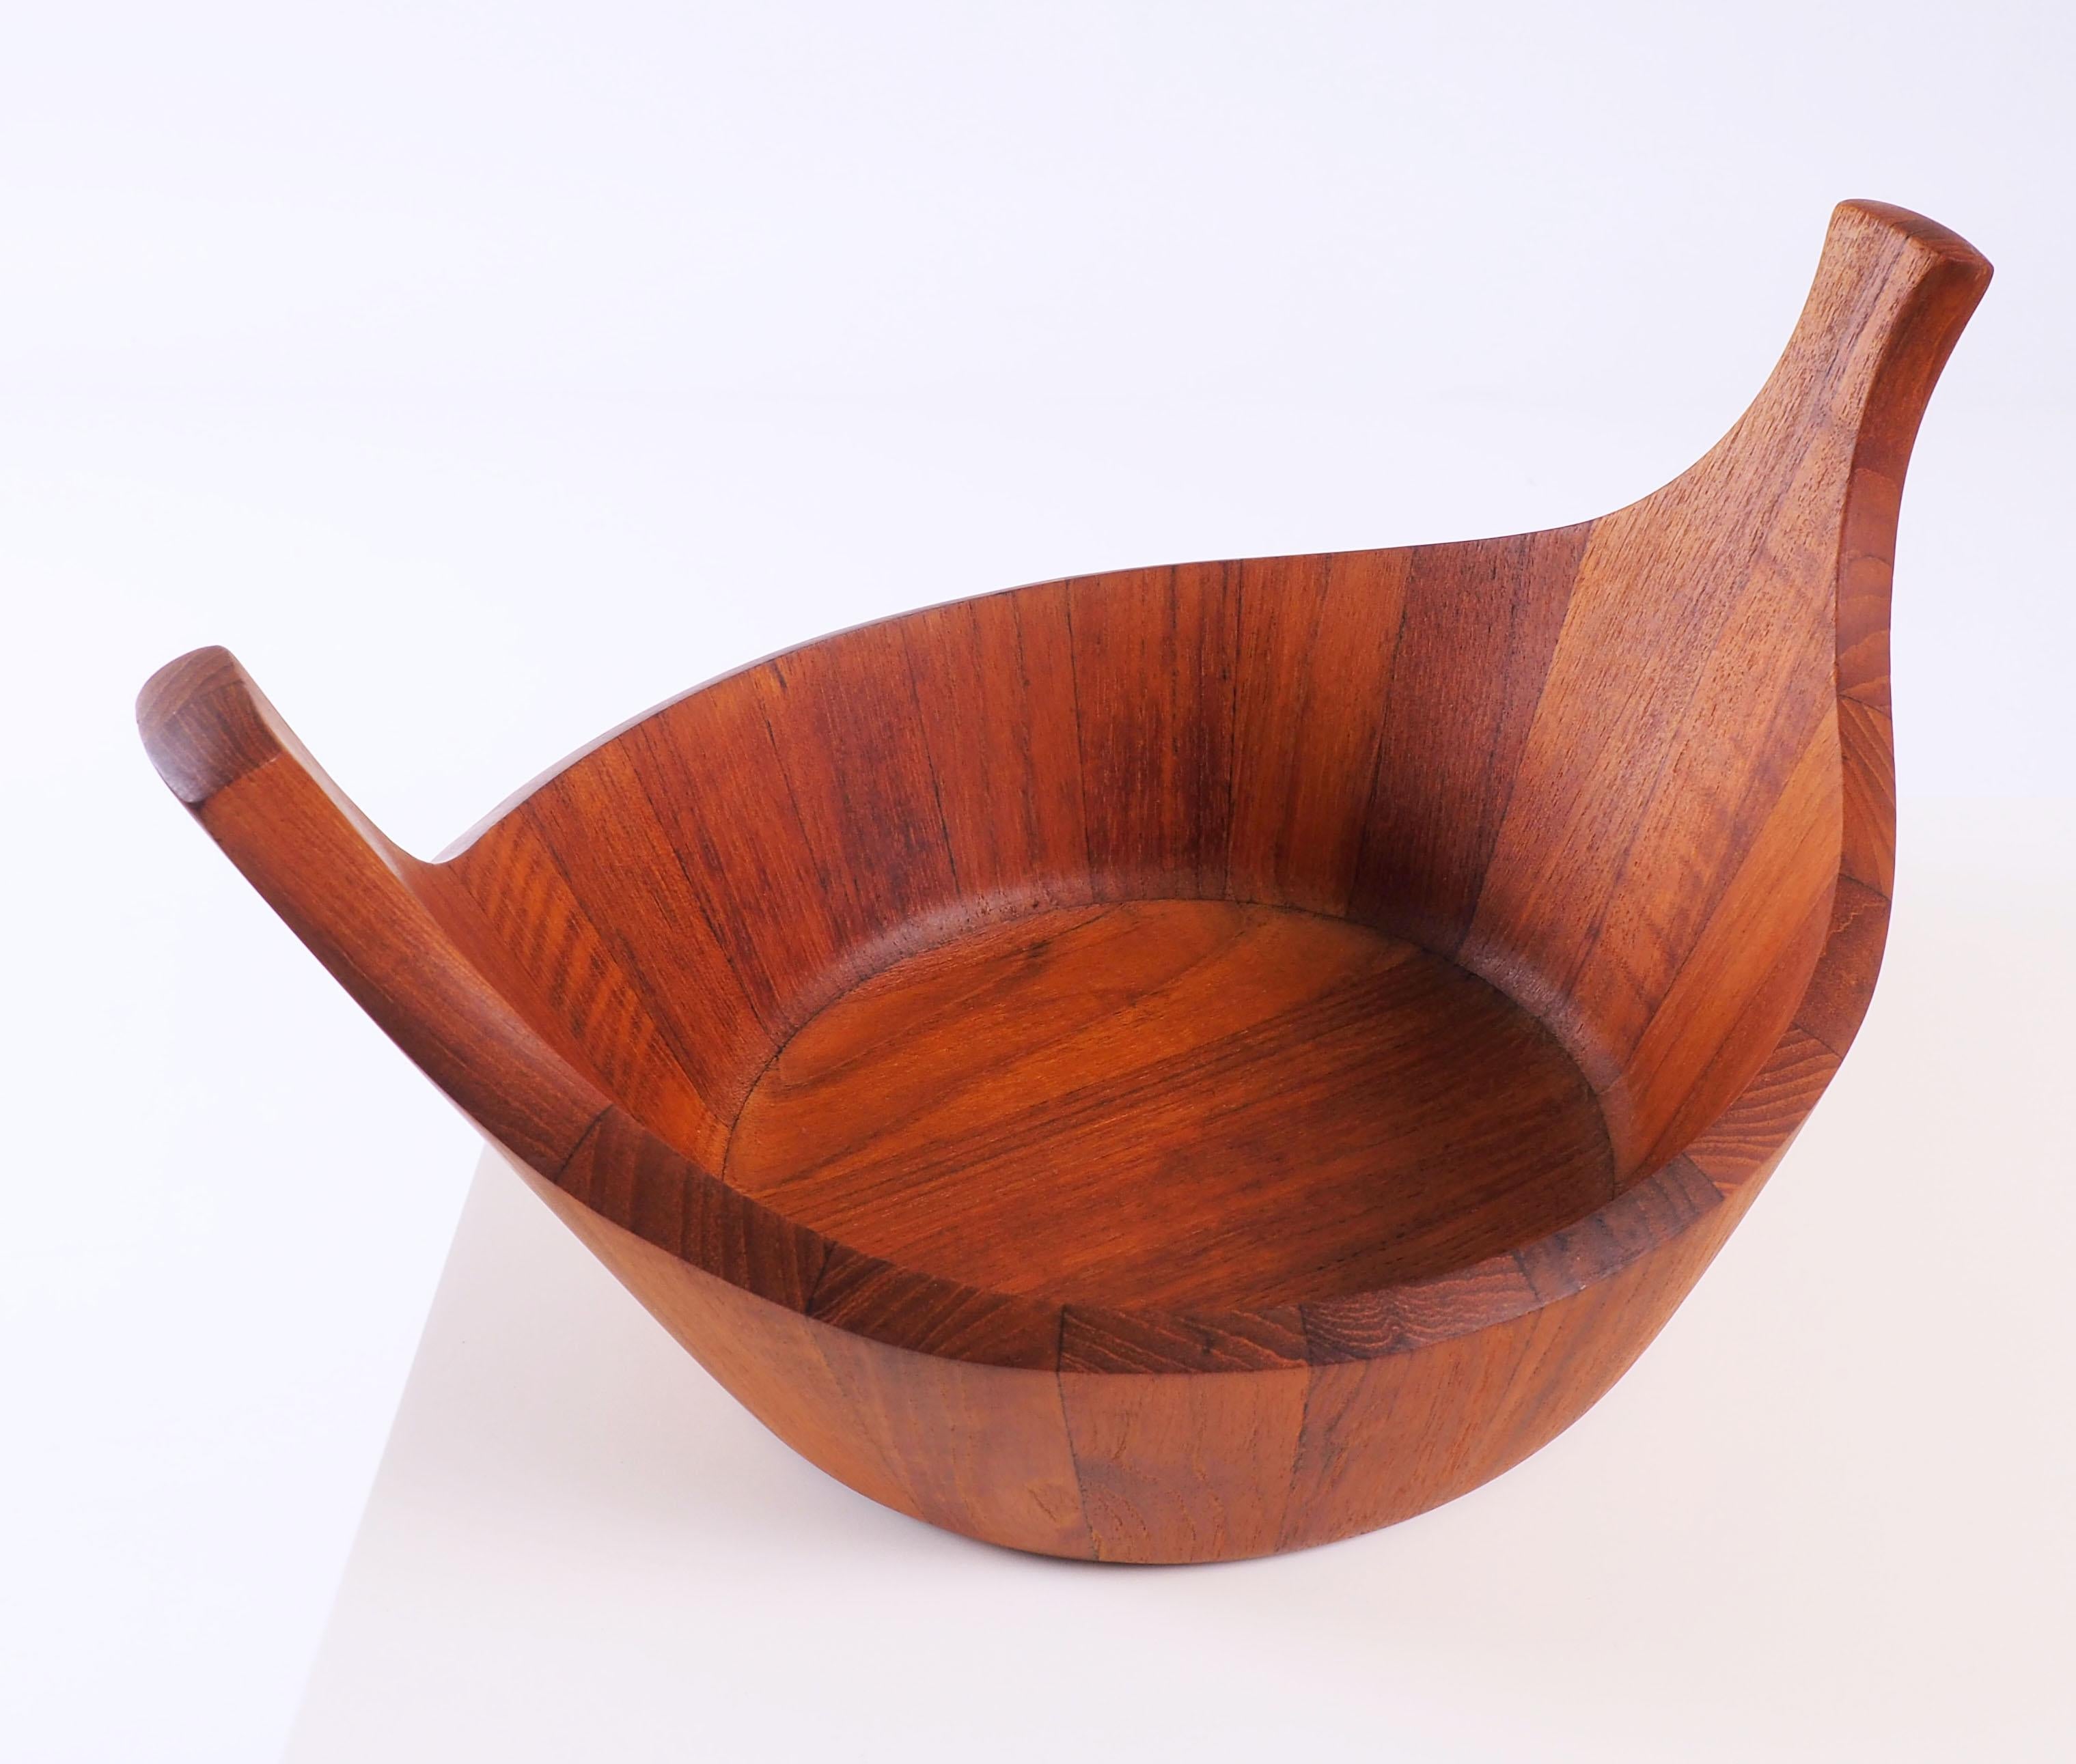 Staved Teak Bowl by the Danish designer Jens Harald Quistgaard For Sale 1